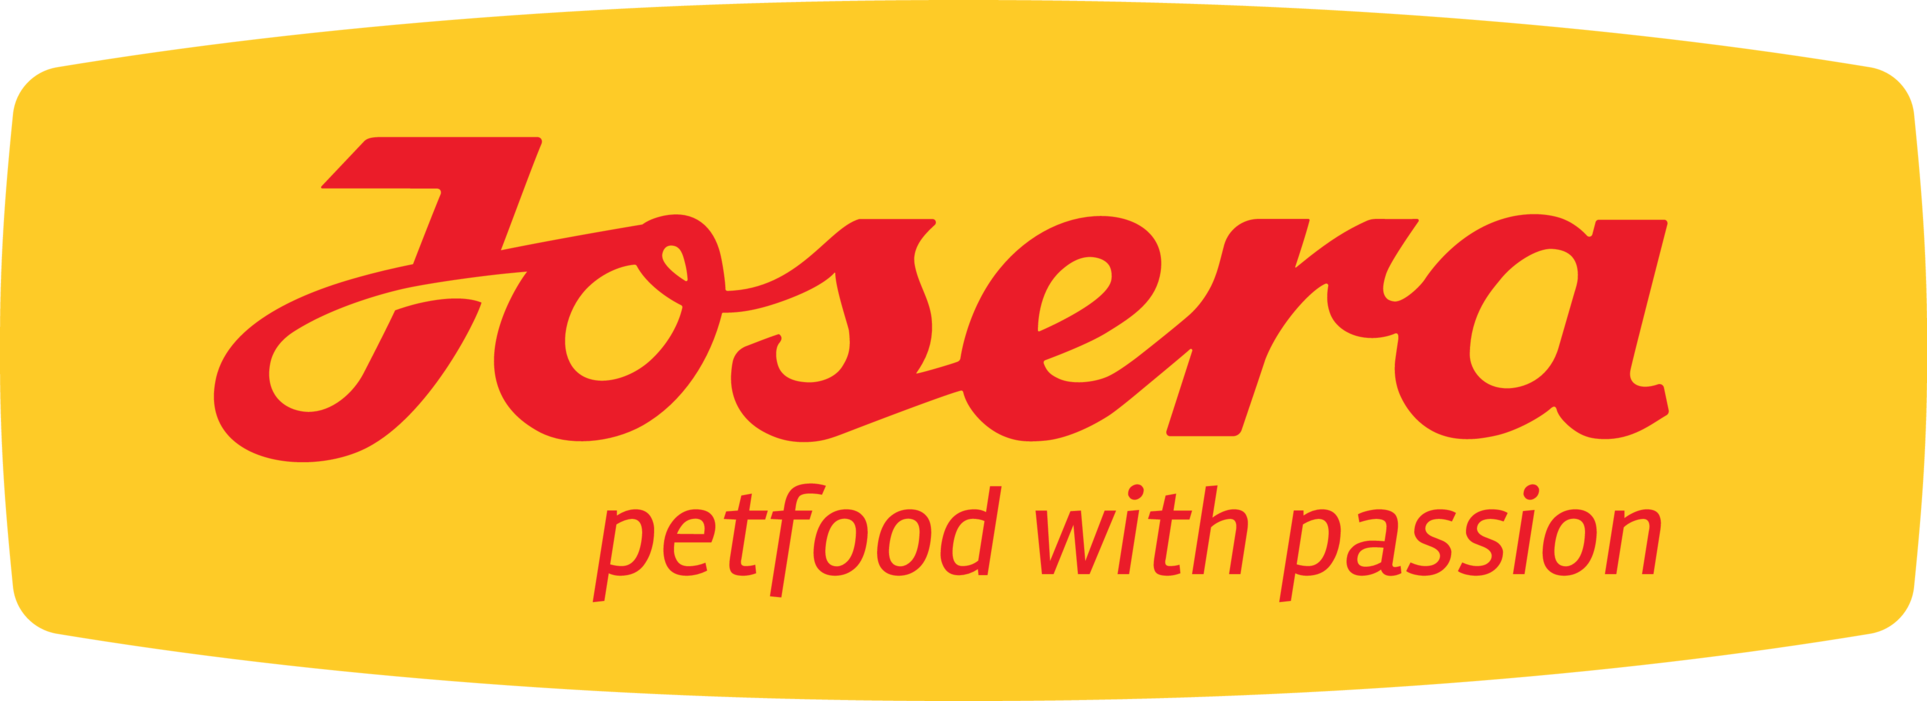 Logo Josera